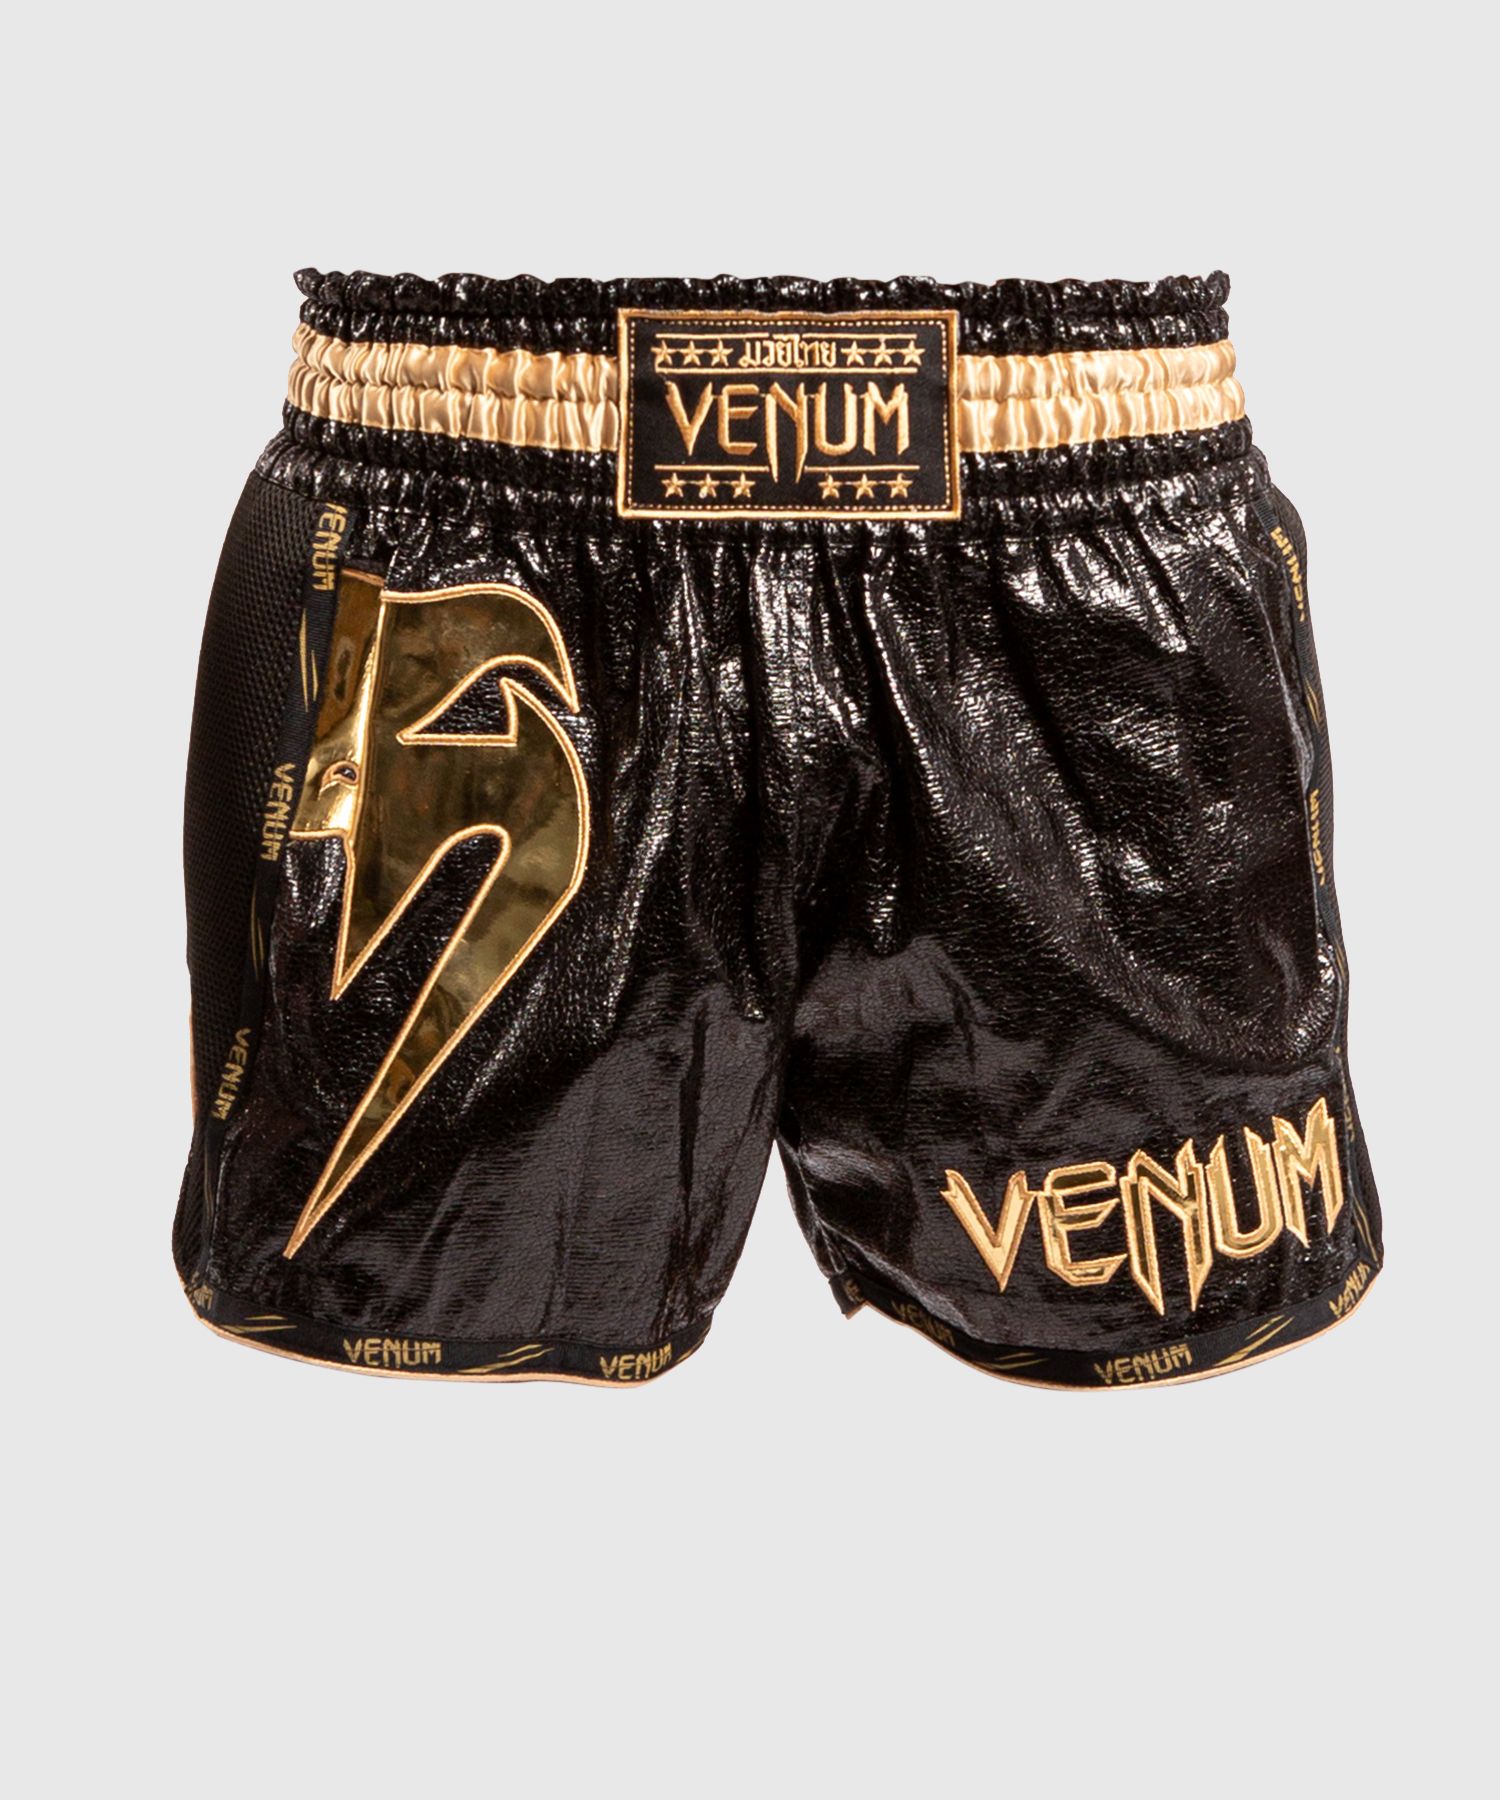 Venum Giant Foil Muay Thai Shorts - Black/Gold